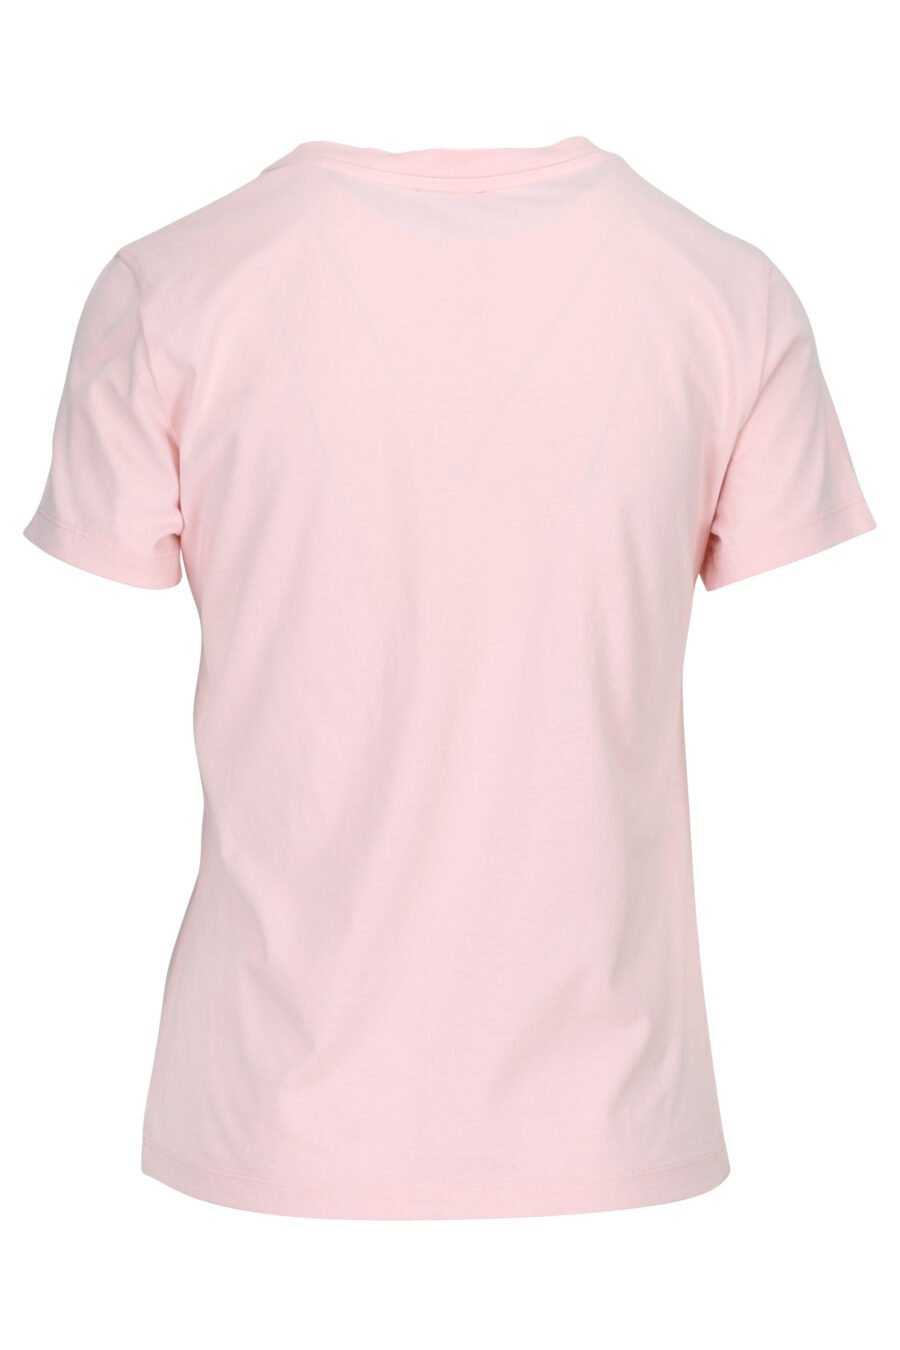 Camiseta rosa con minilogo "boke flower" - 3612230483330 1